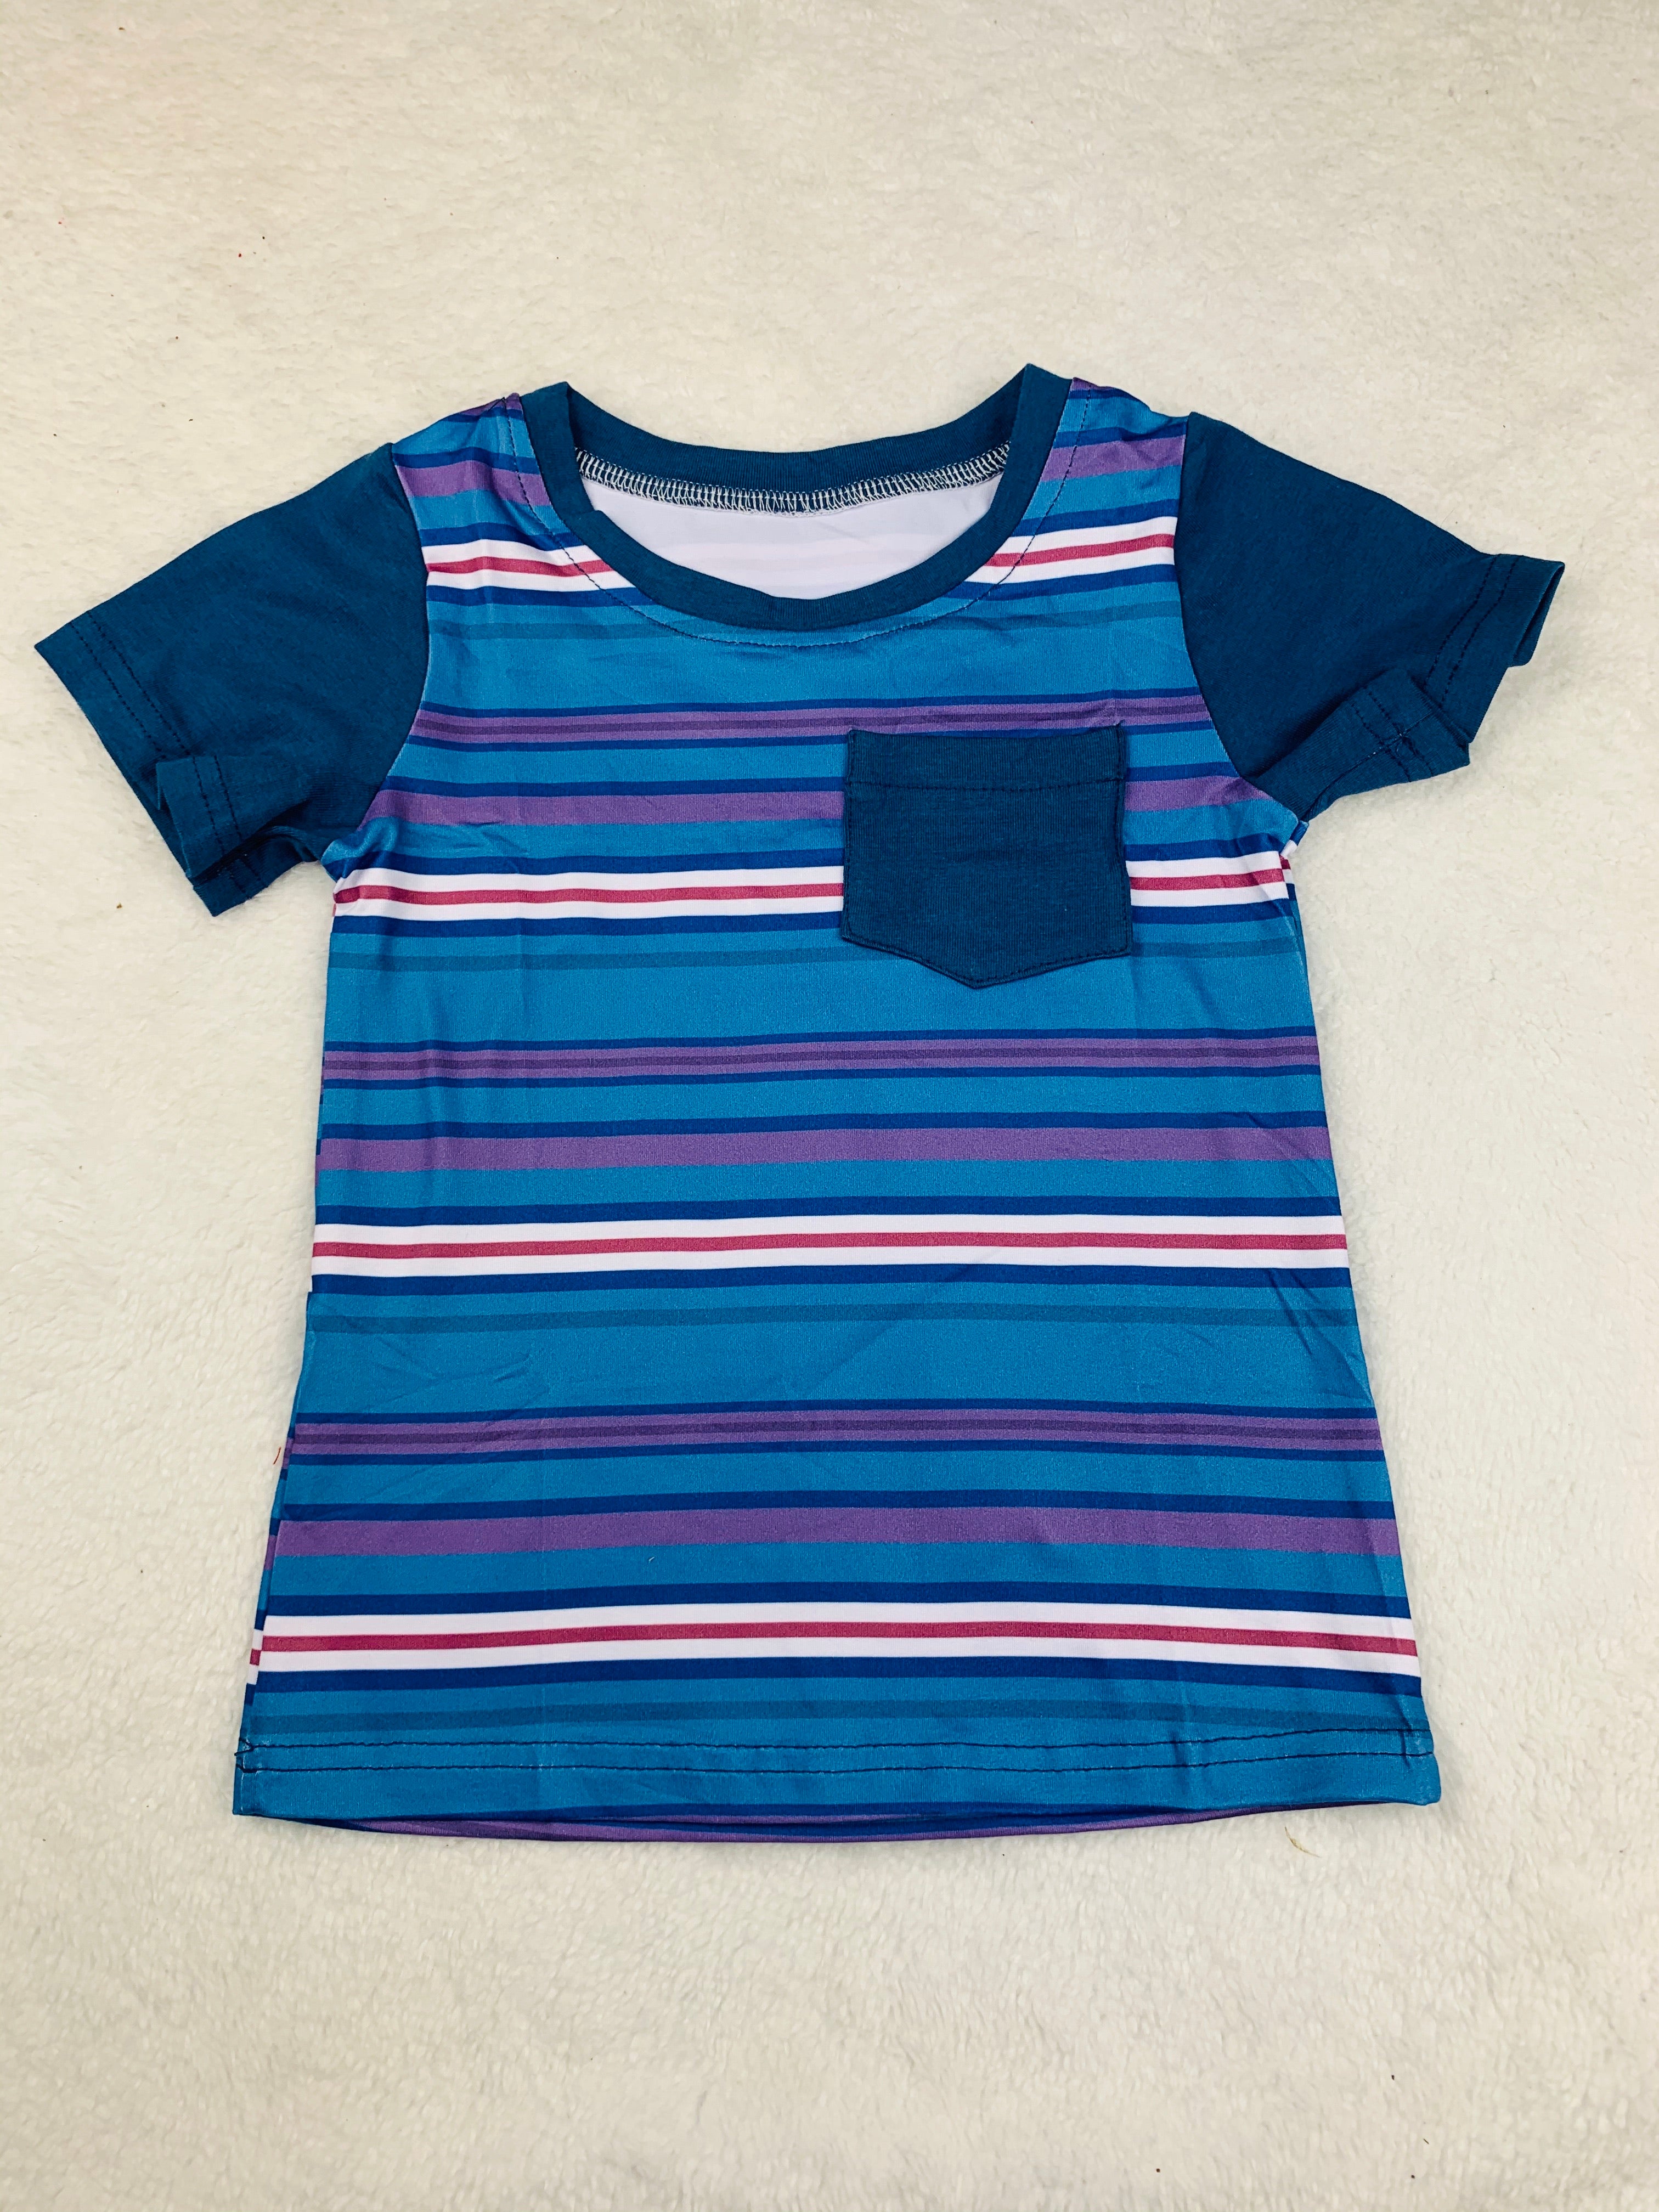 Blue Striped Shirt LAST ONE!